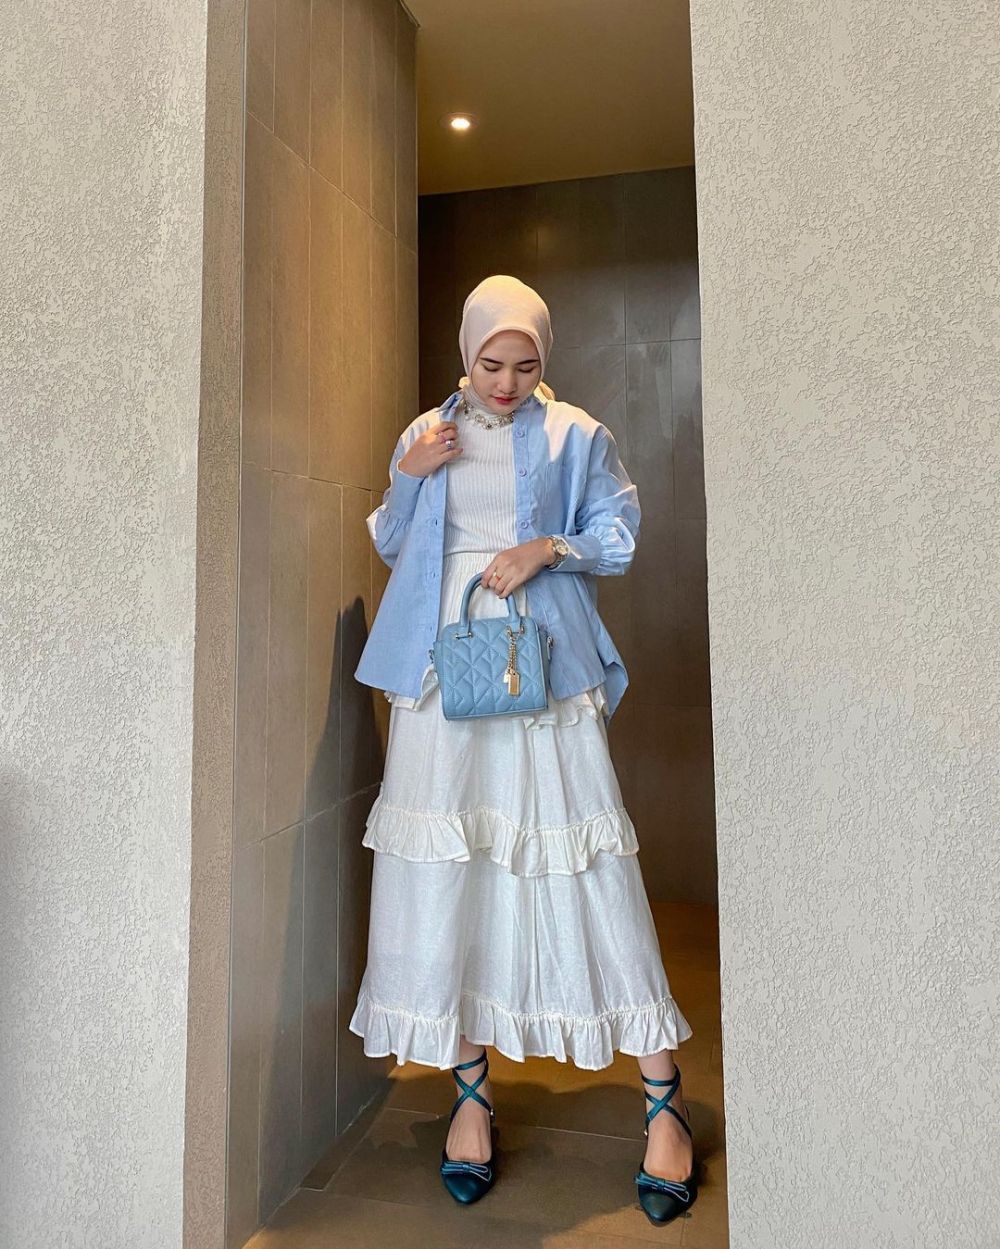 12 Ide Outfit Kantor Wanita Hijab dengan Warna Biru Ala Intan Ghazella